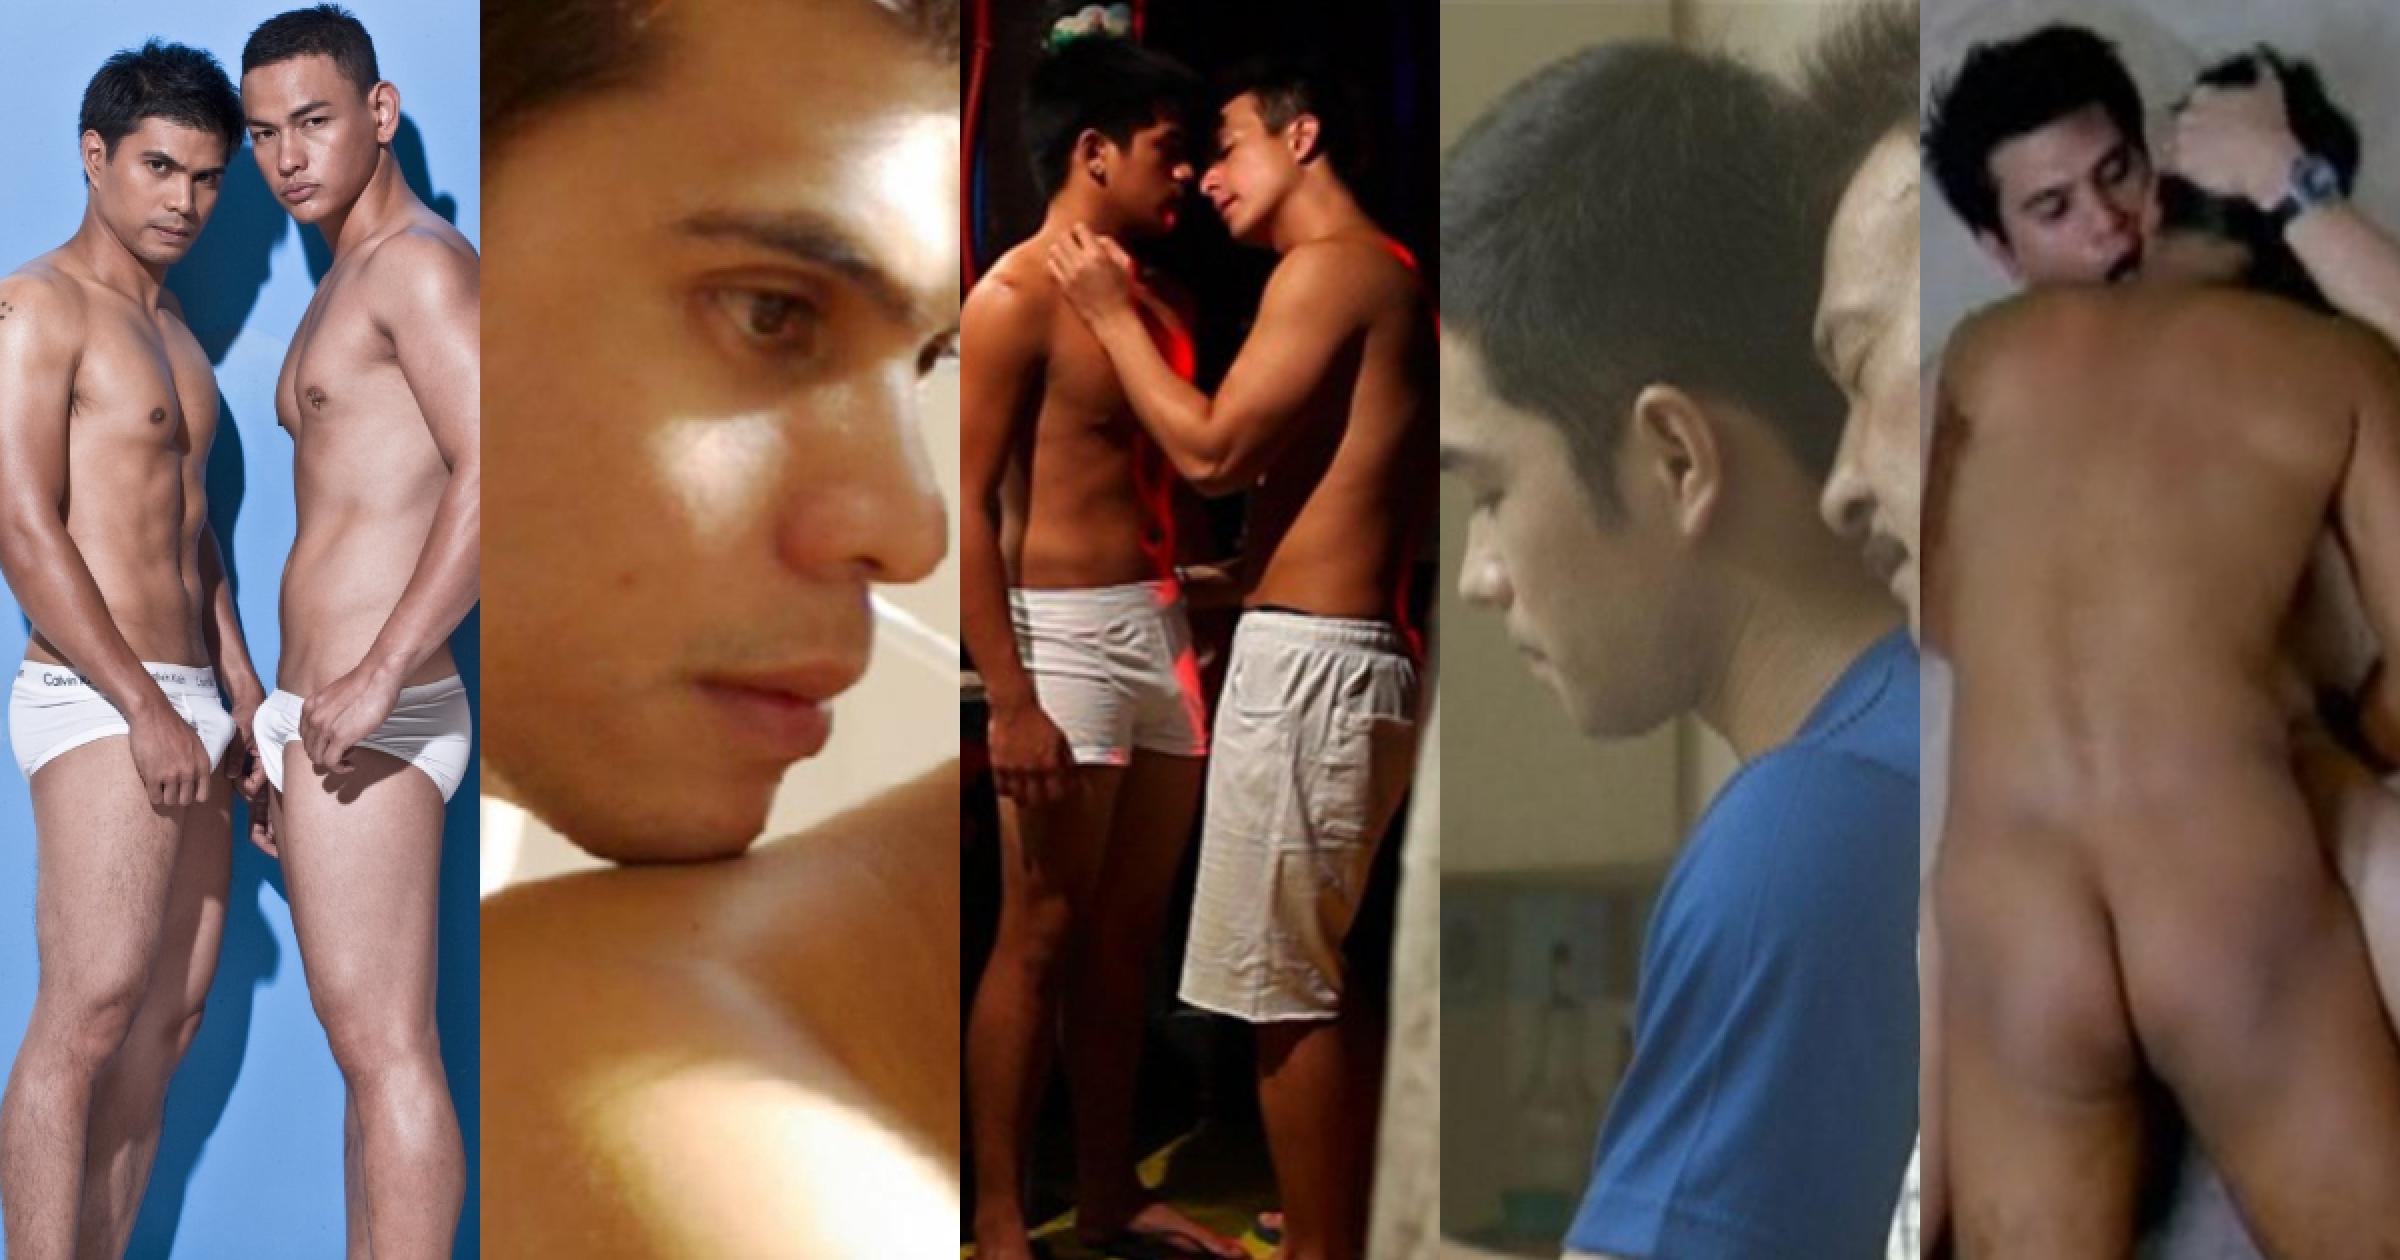 Filipino gay sex scene